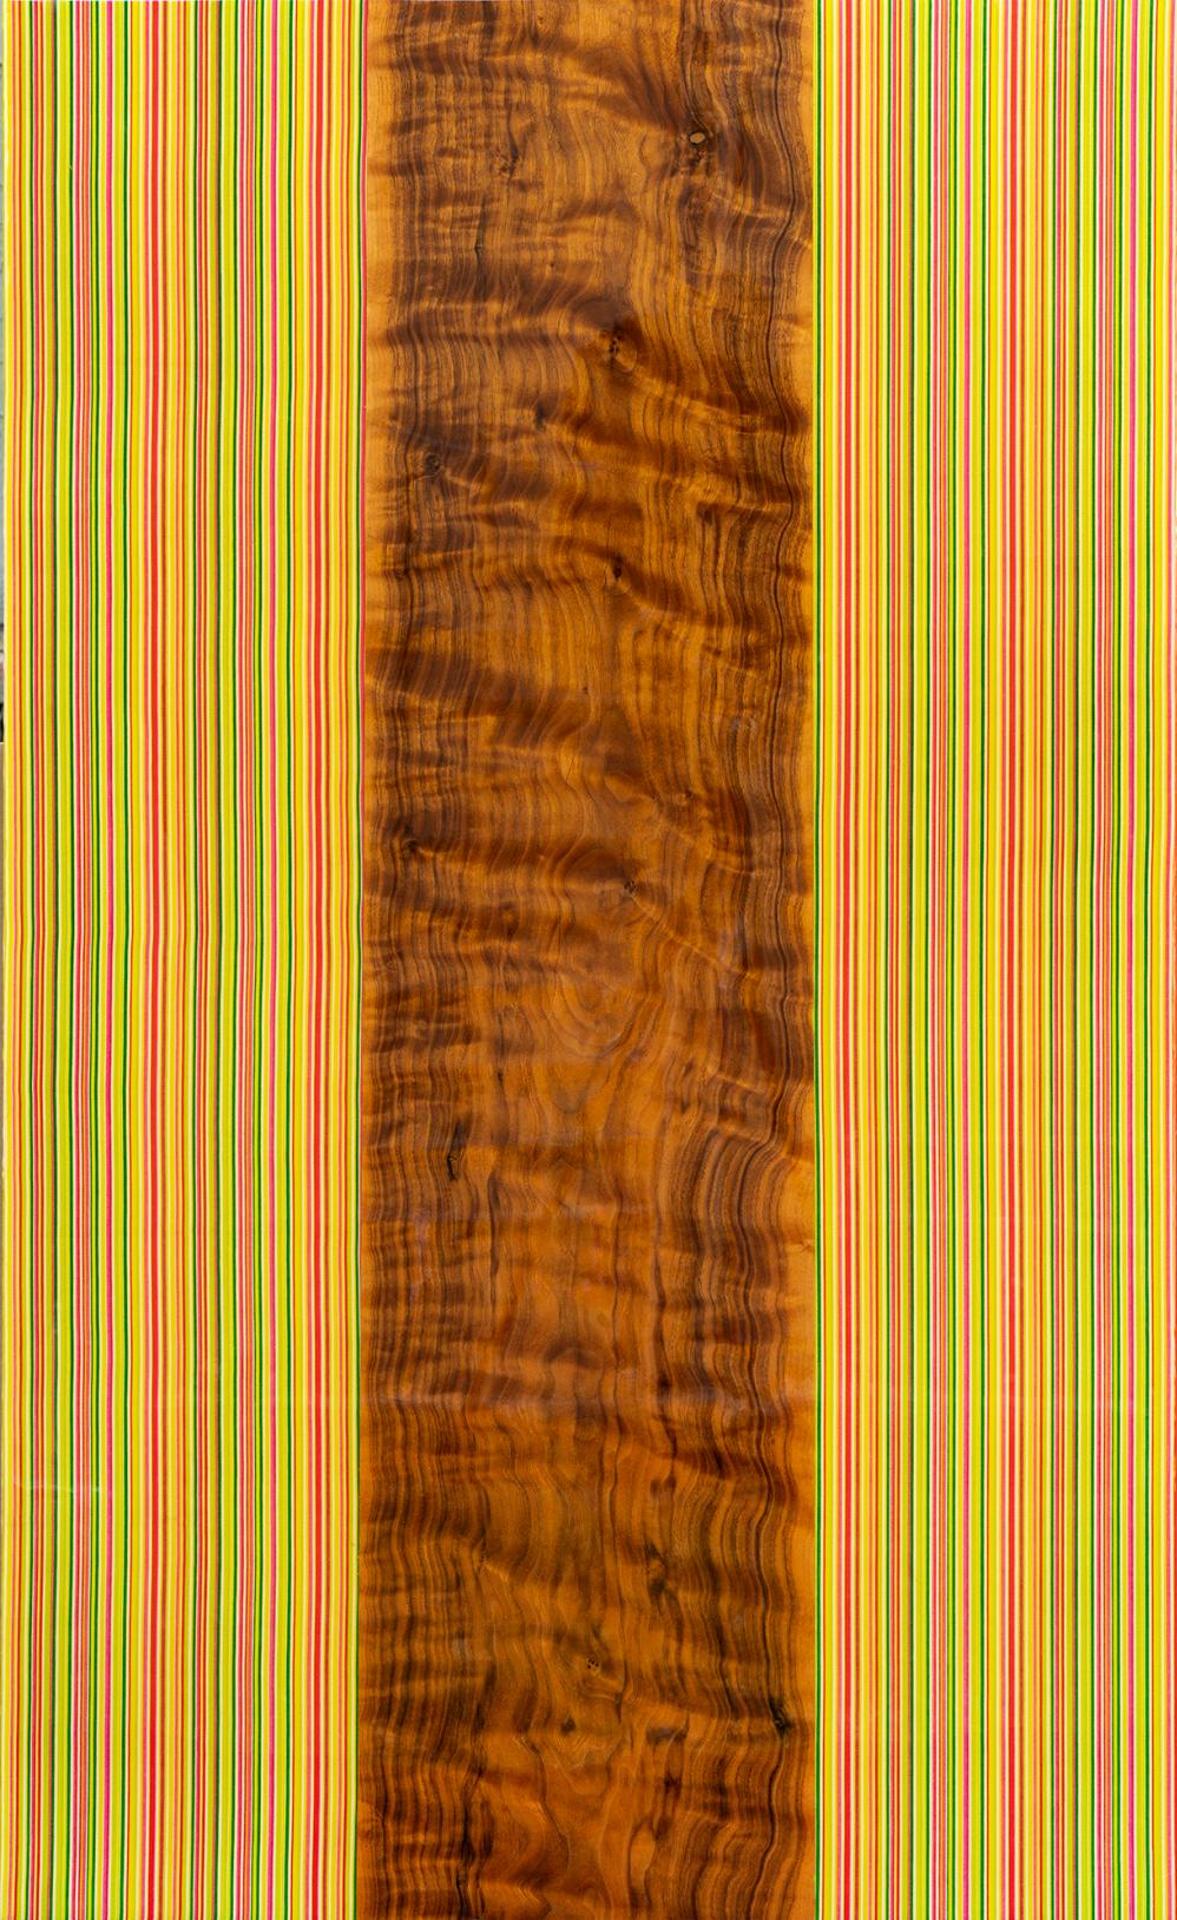 Kyle Herranen (1977) - Figured Walnut on Stripes